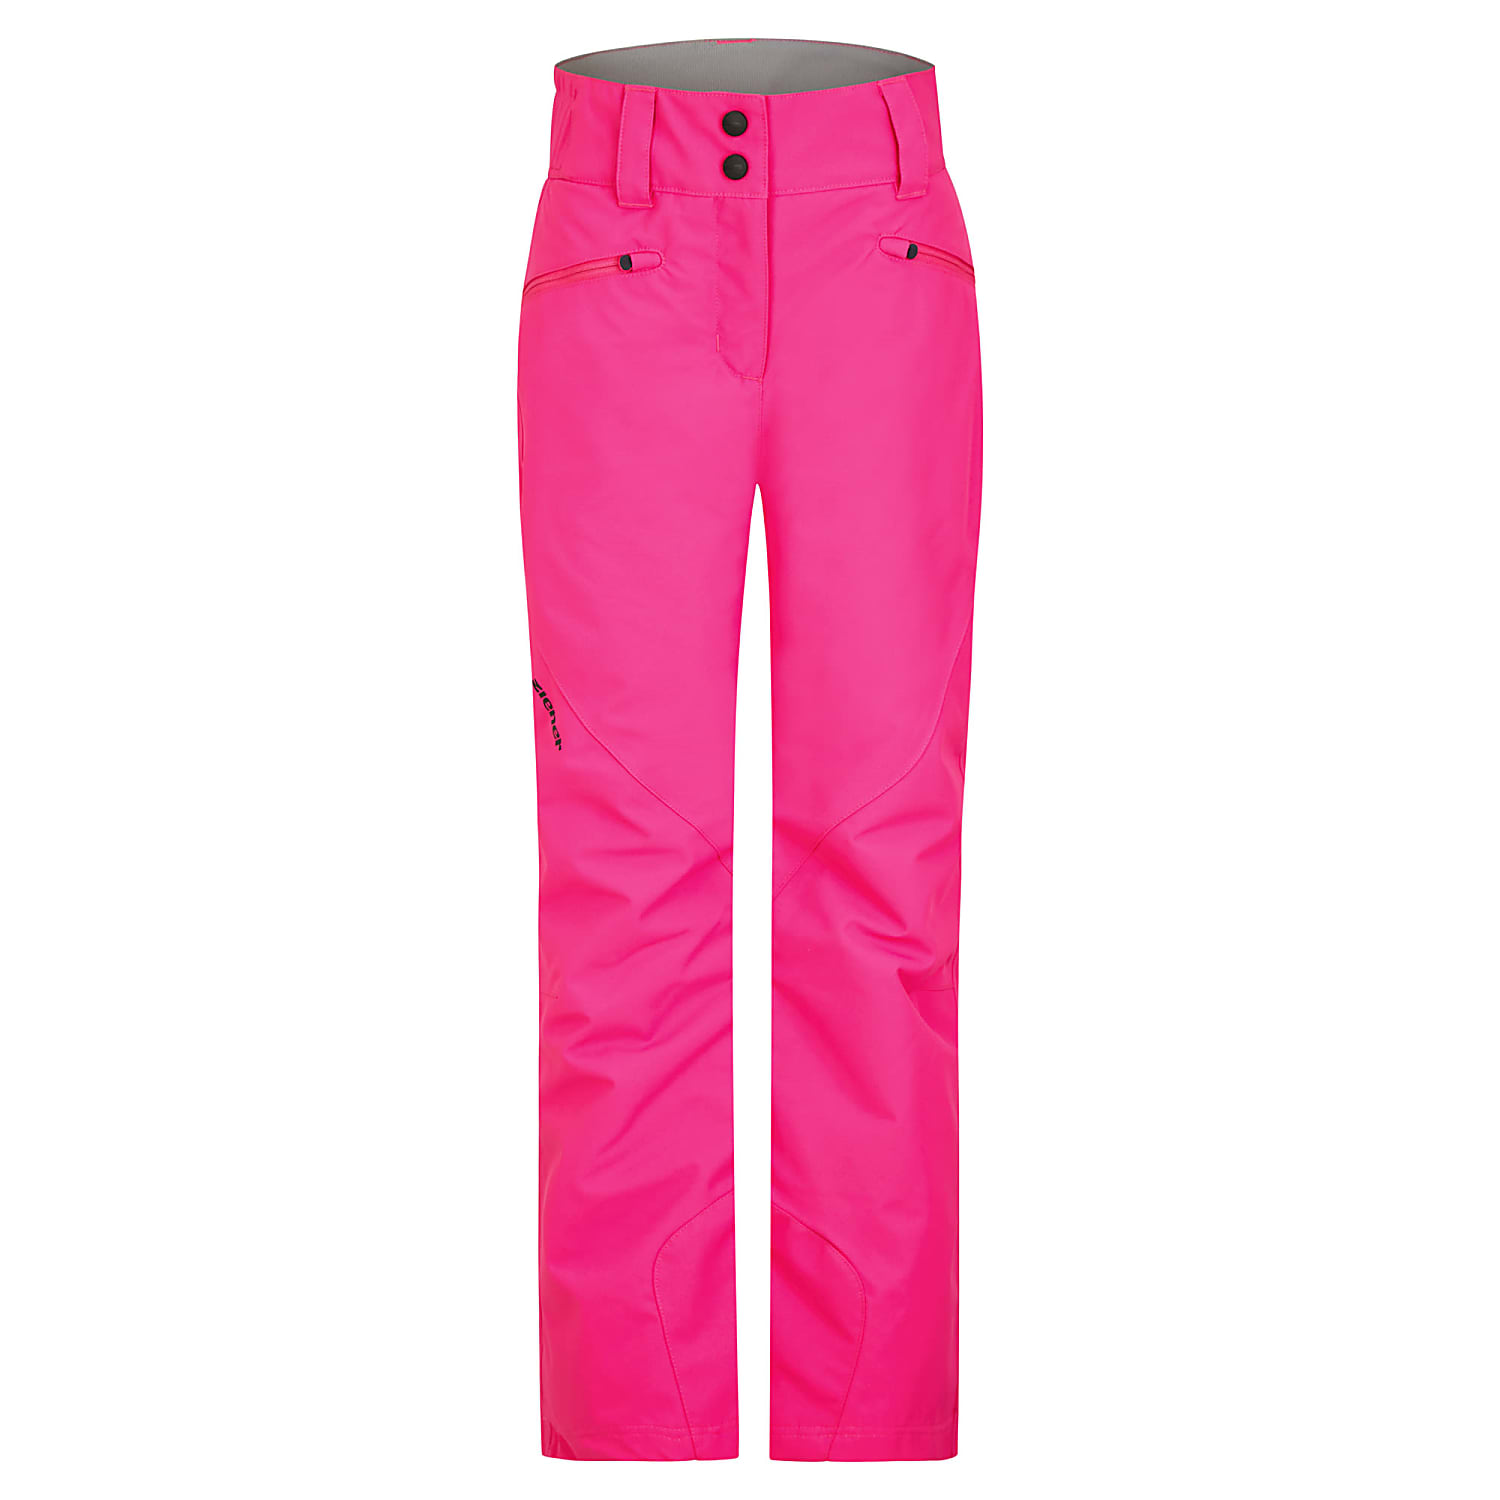 Pink Jetzt GIRLS Bright kaufen Ziener (PREVIOUS ALIN online MODEL),